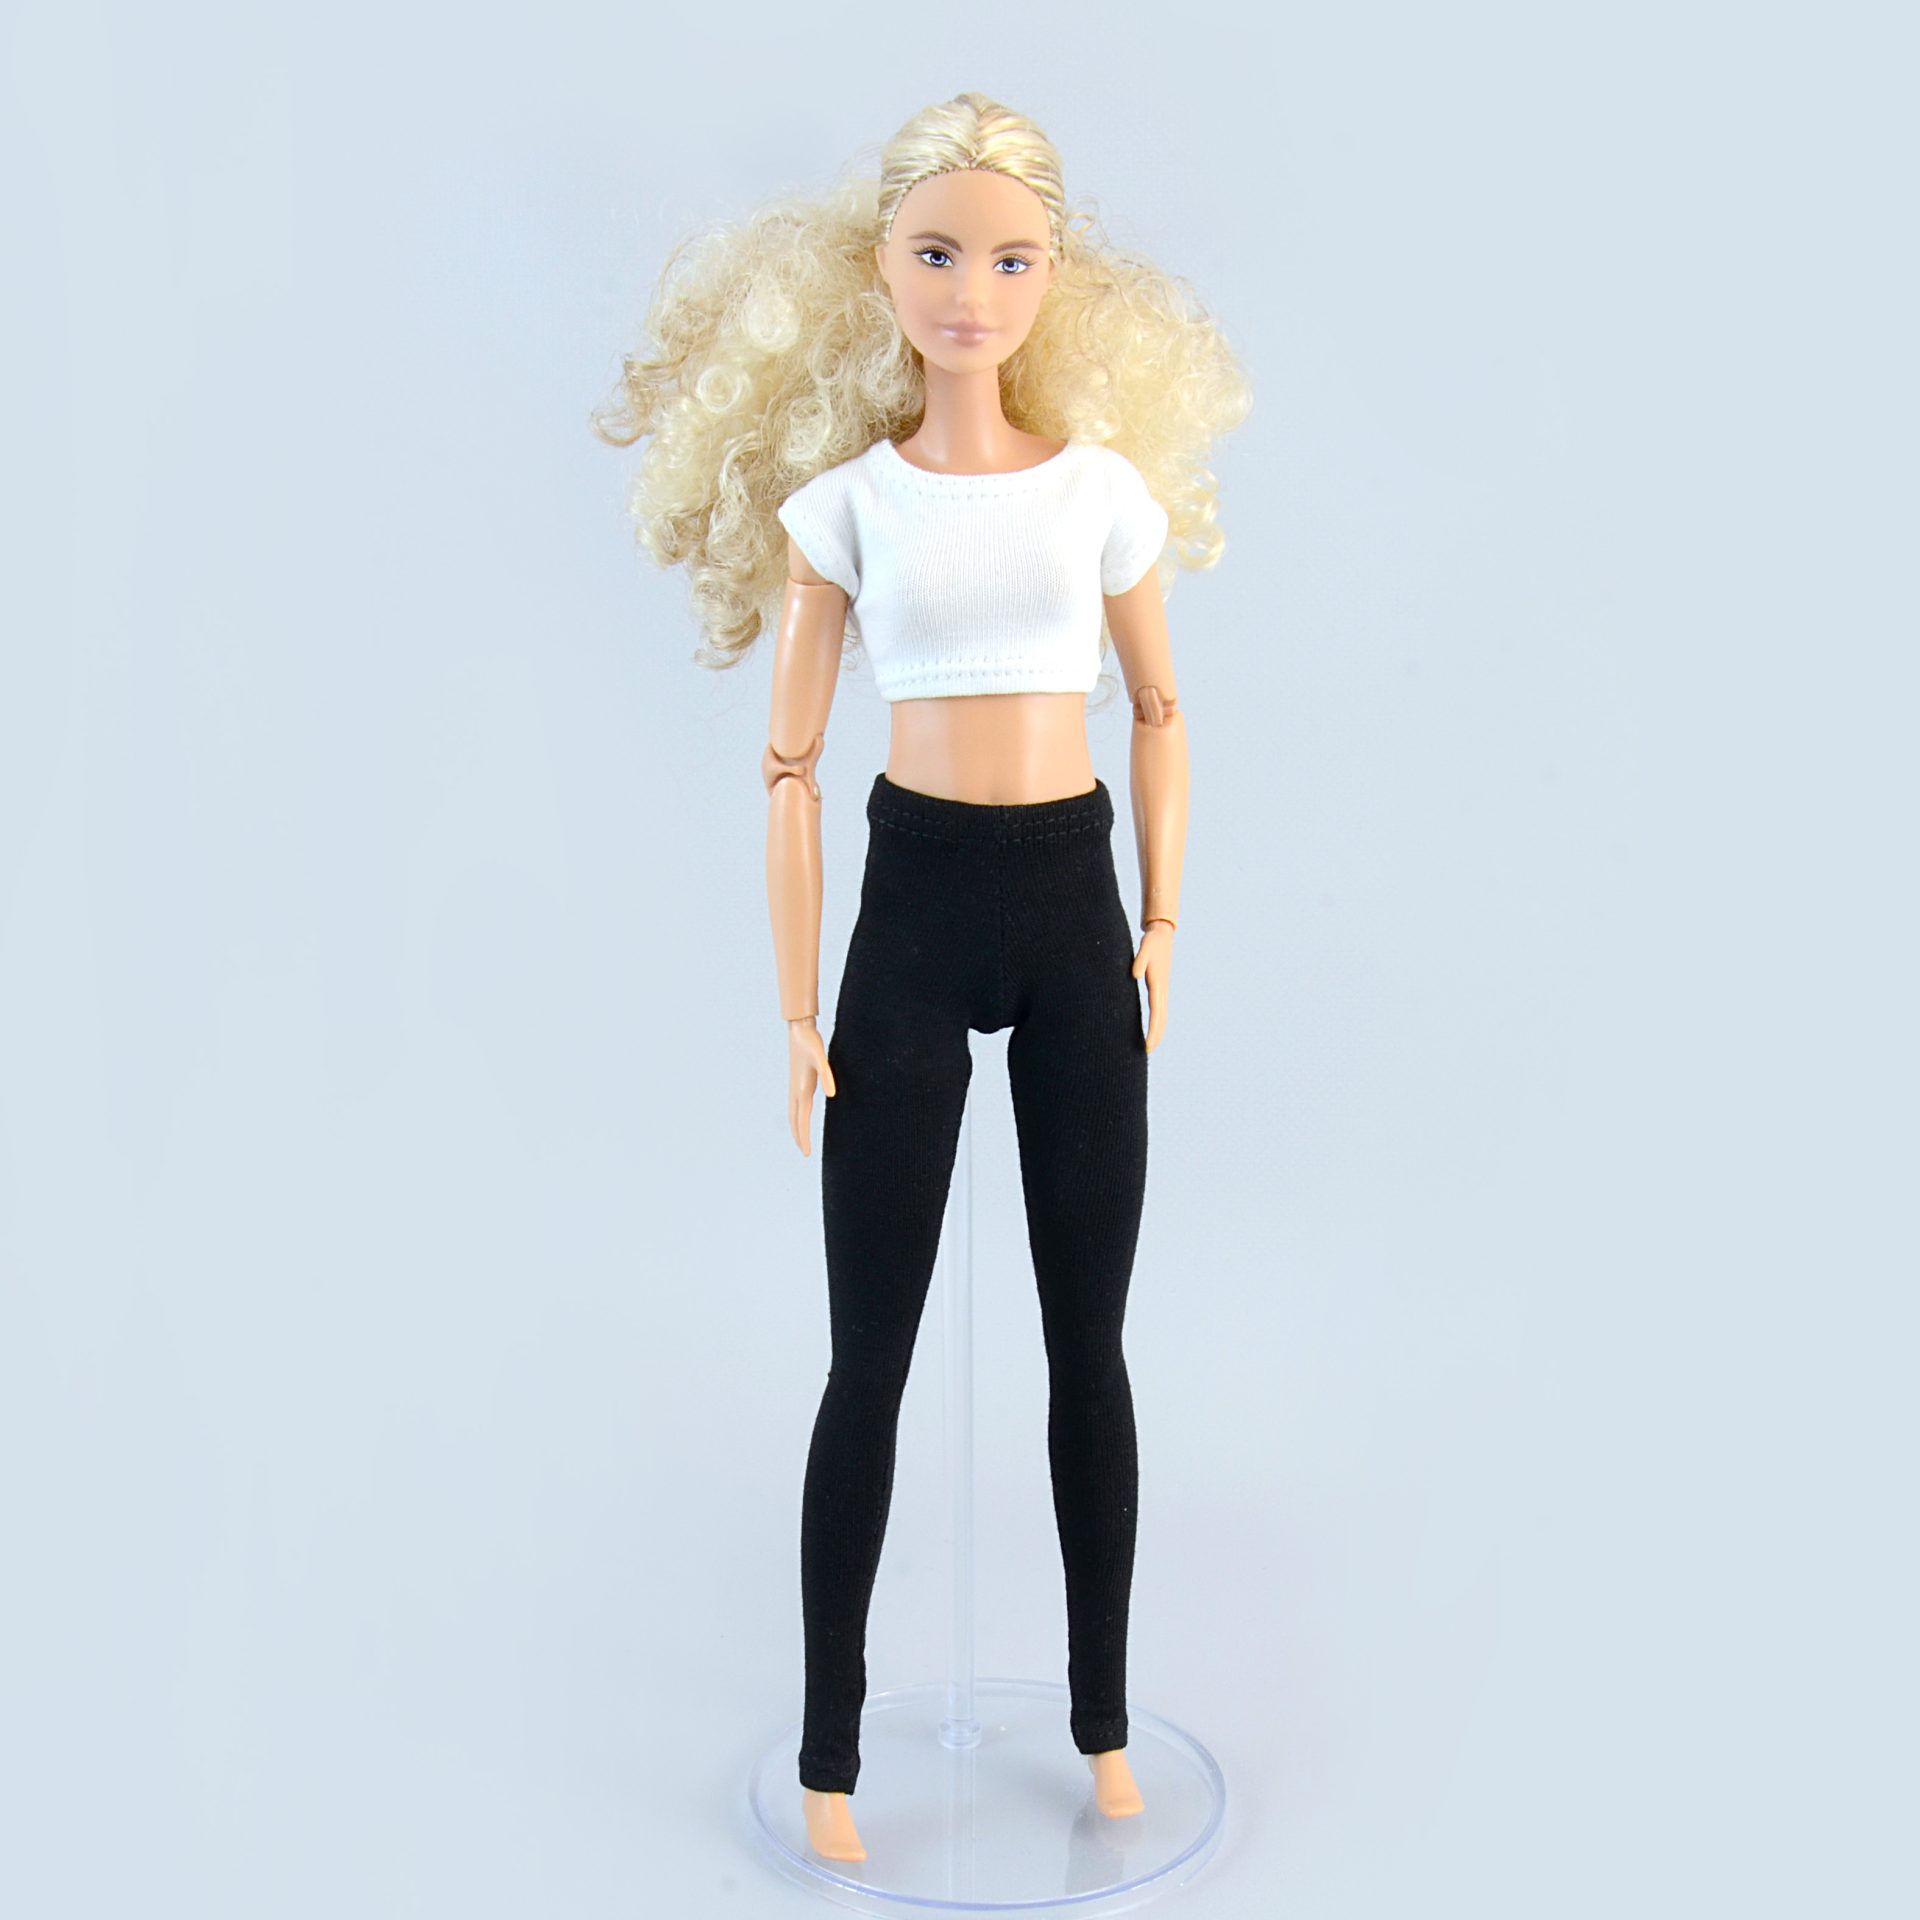 mantas barbie - Buy mantas barbie with free shipping on AliExpress